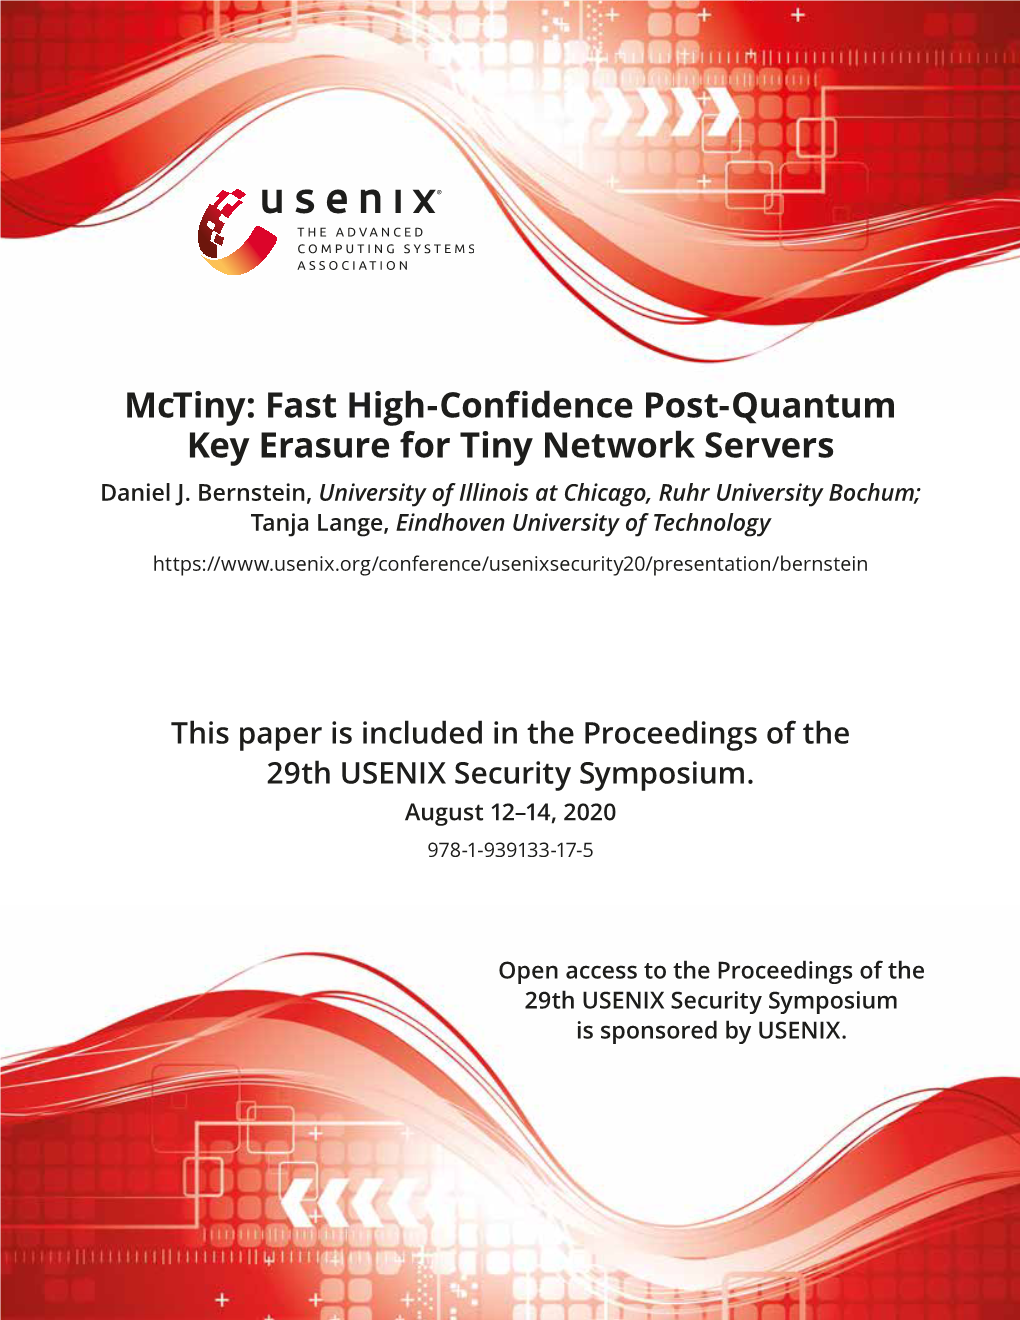 Mctiny: Fast High-Confidence Post-Quantum Key Erasure for Tiny Network Servers Daniel J